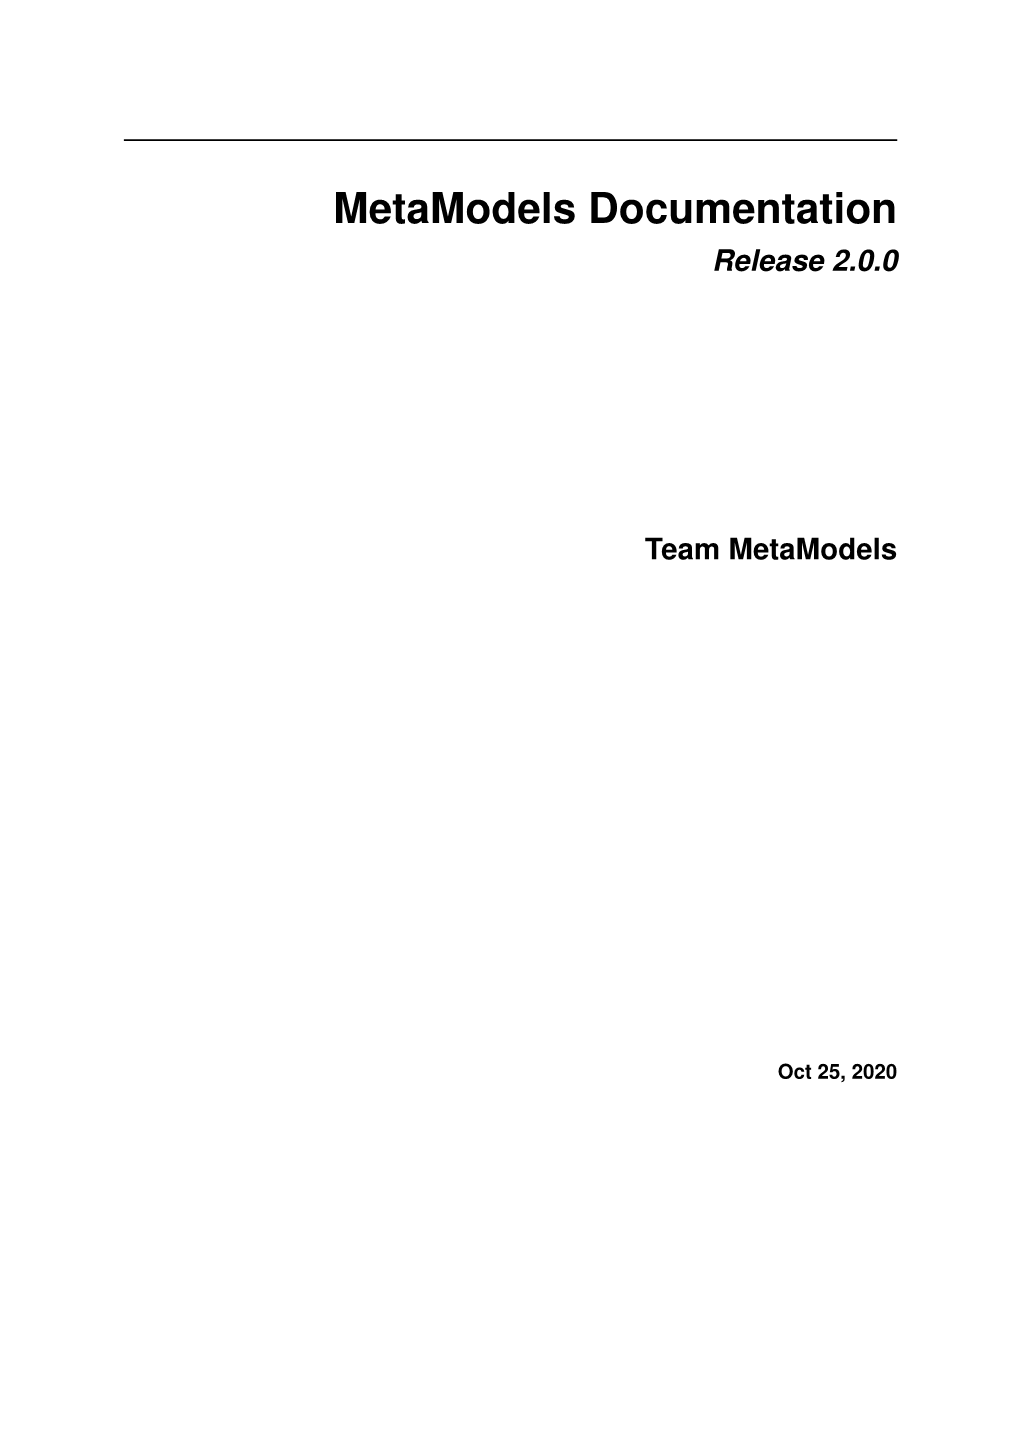 Metamodels Documentation Release 2.0.0